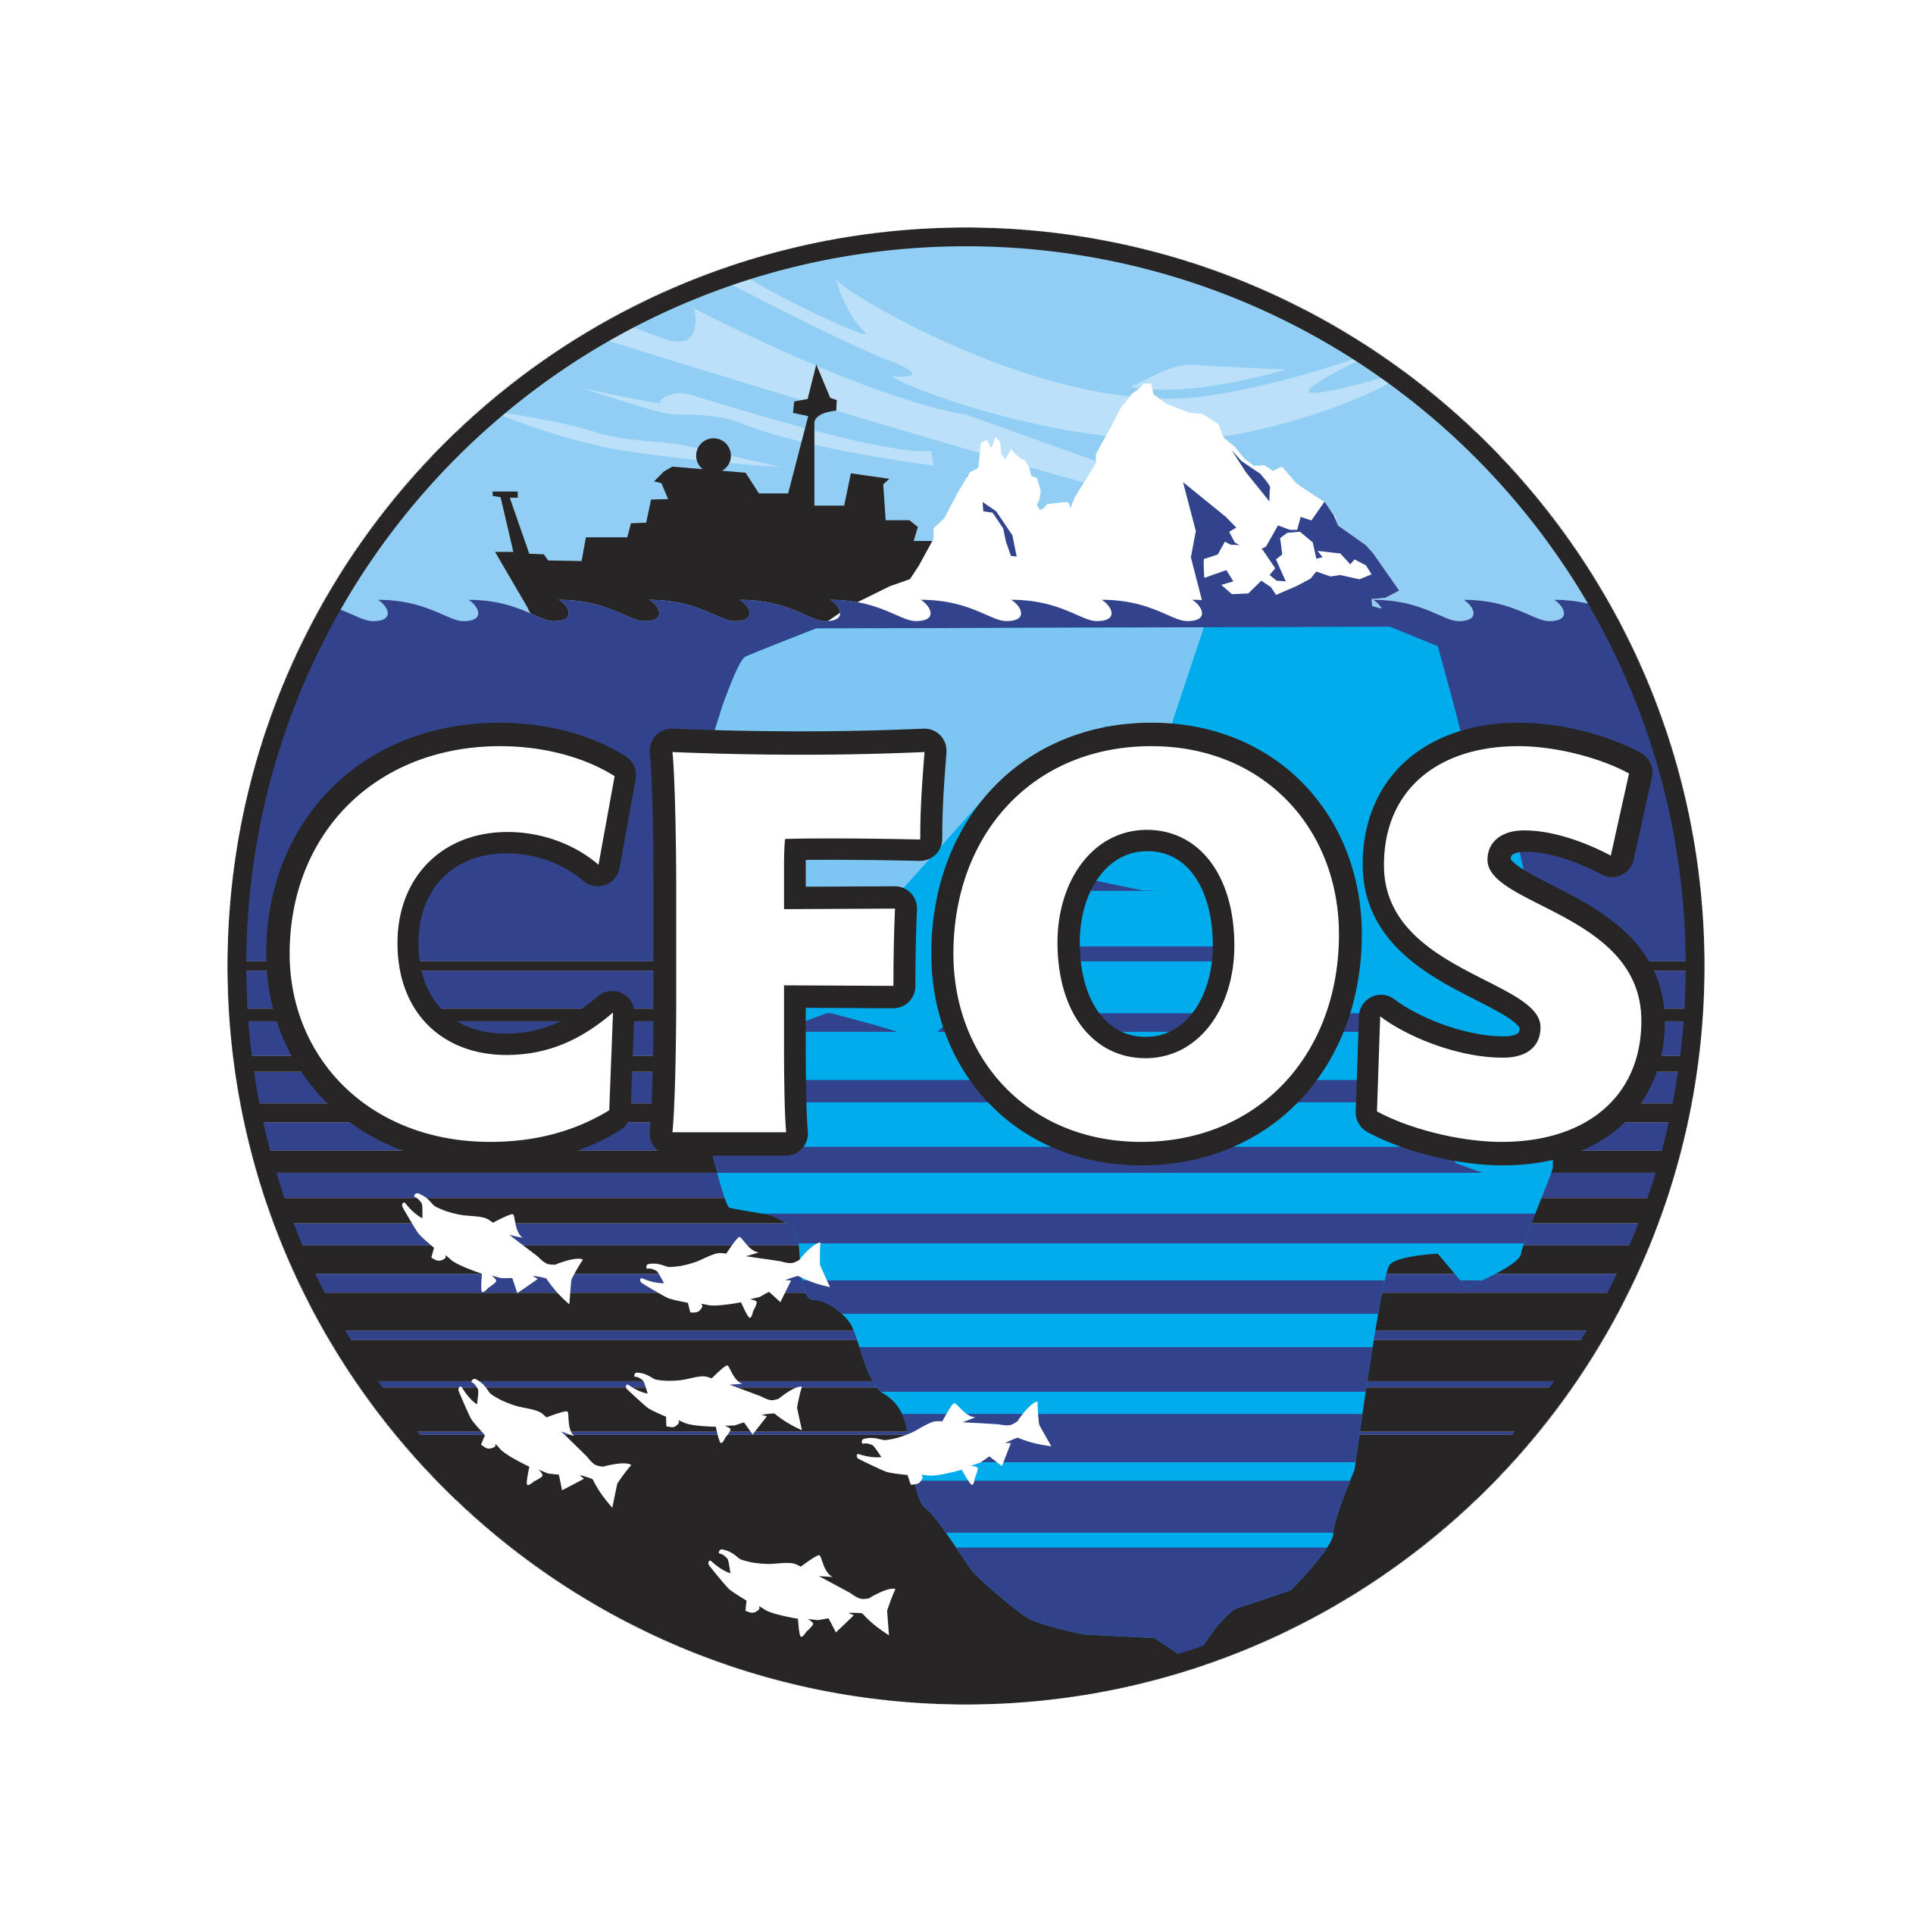 CFOS graphic - Color logo